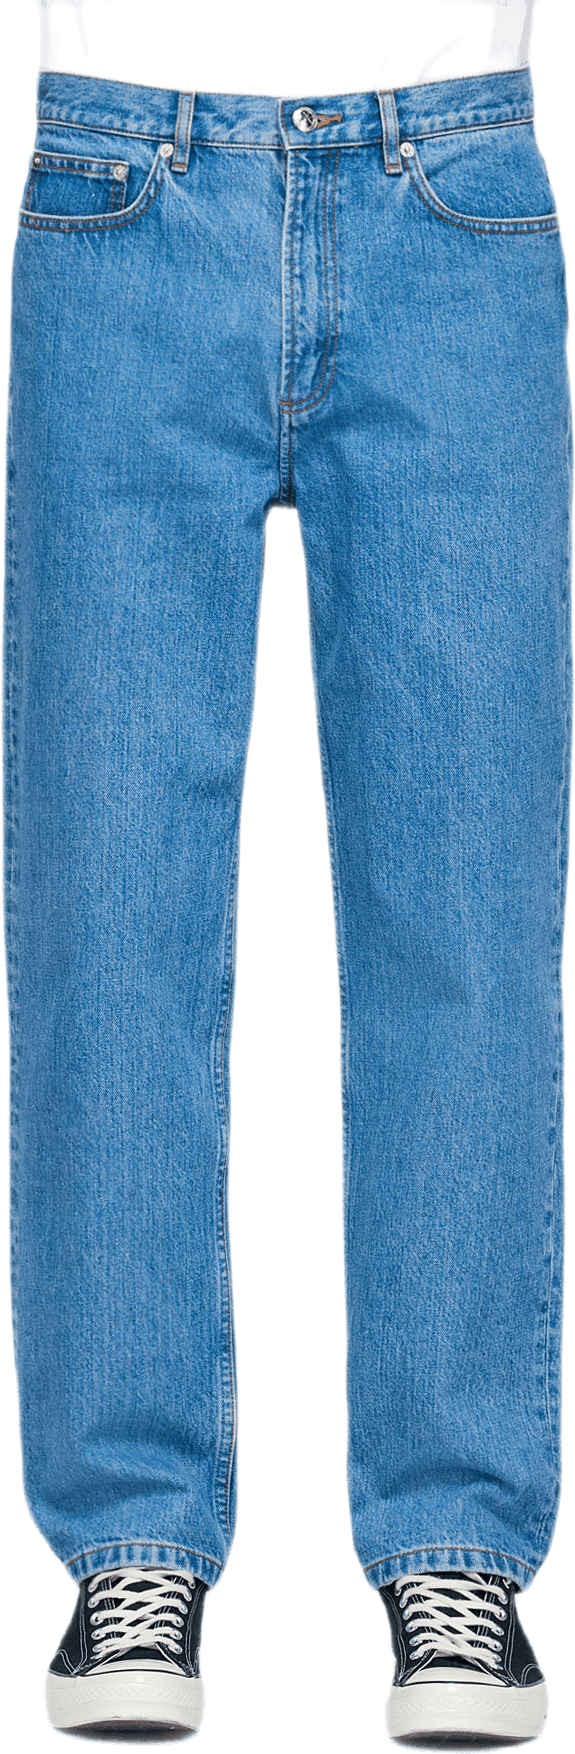 Martin Jeans Blue